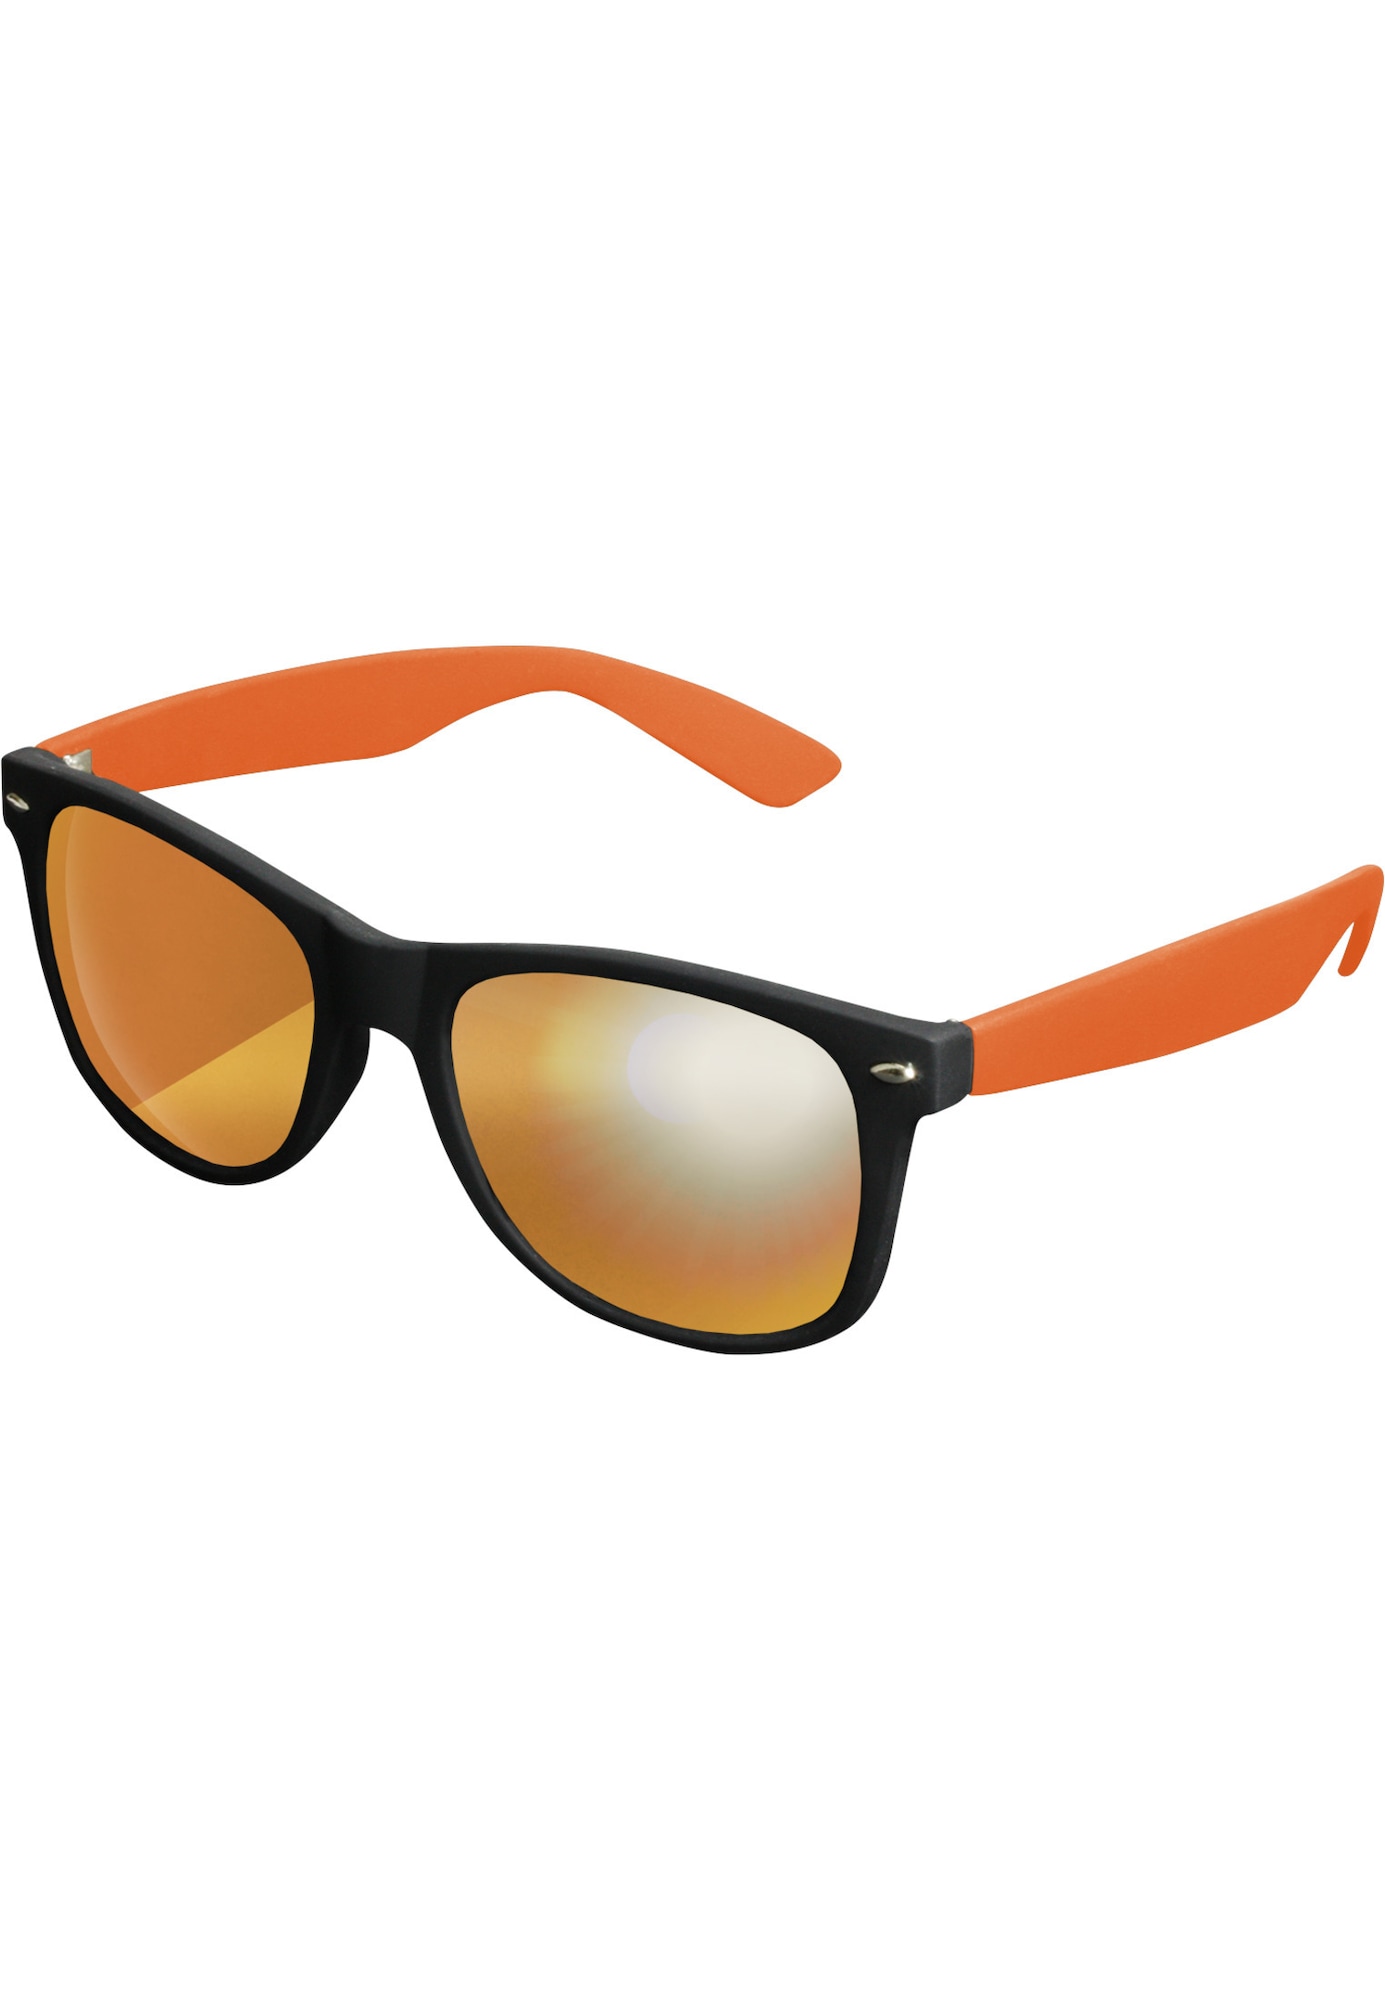 Slnečné okuliare Likoma oranžová čierna MSTRDS